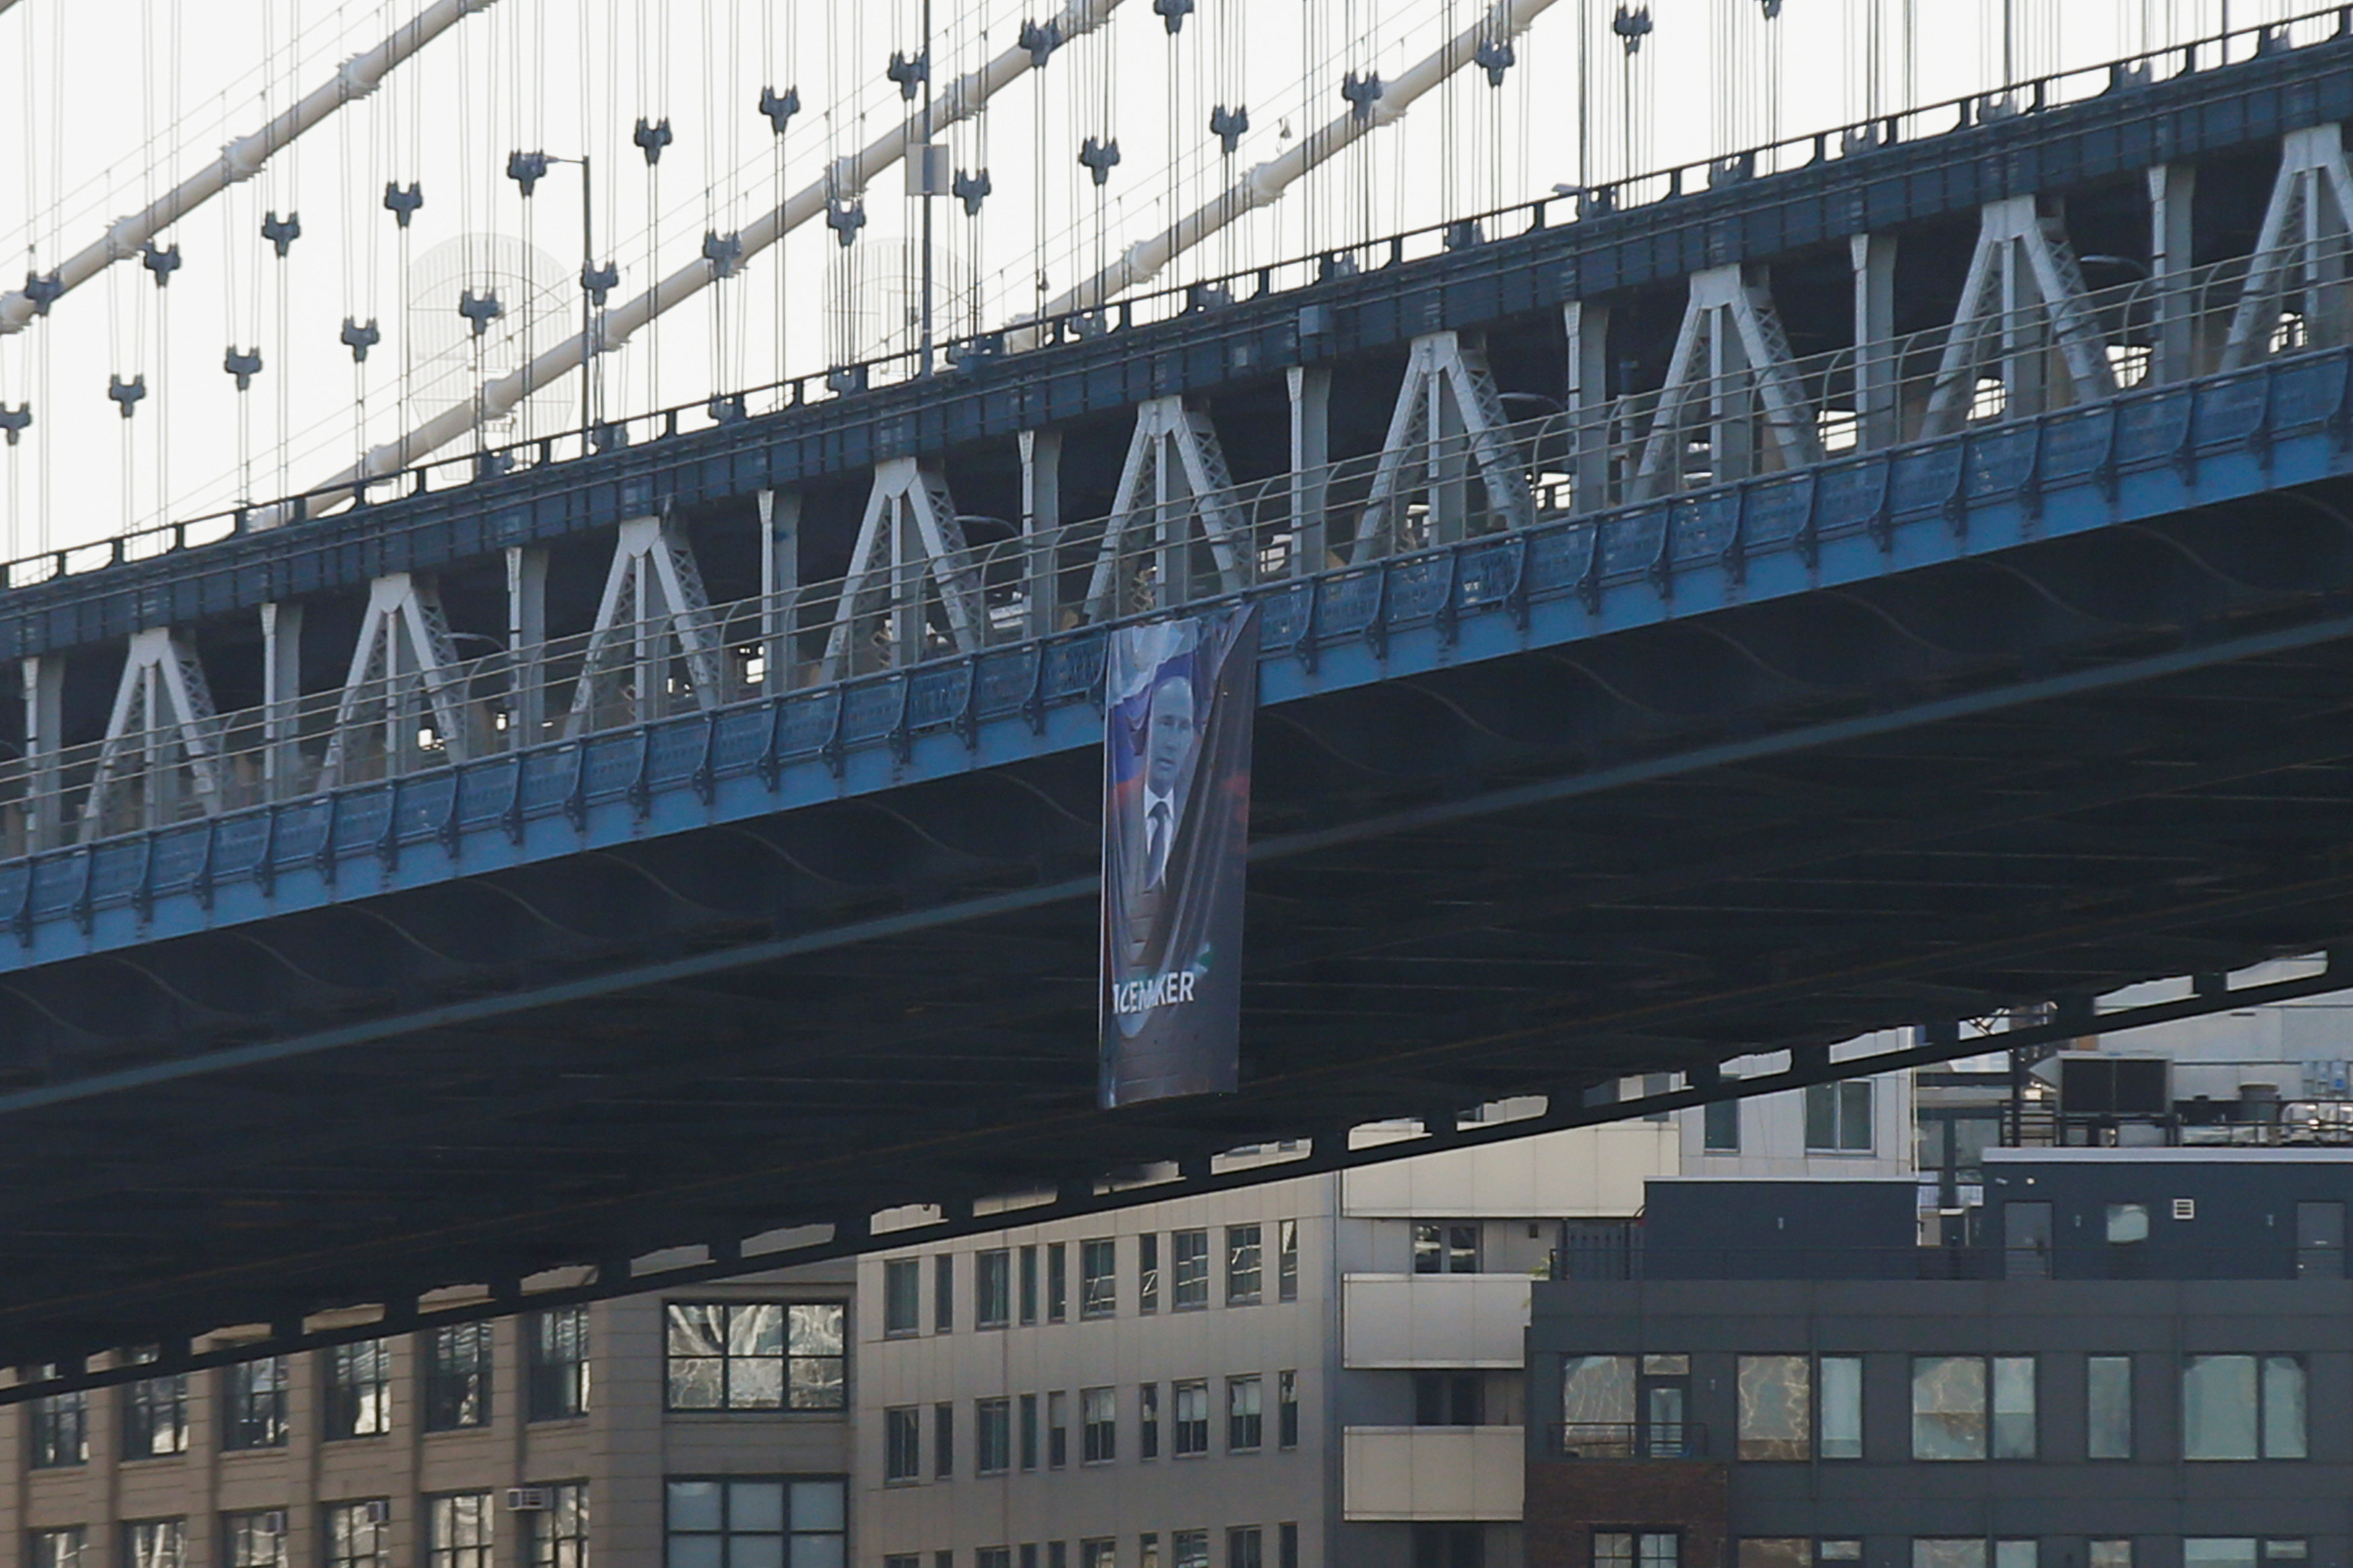 First we take Manhattan: Πανό του Πούτιν ανέμιζε σε γέφυρα της Νέας Υόρκης